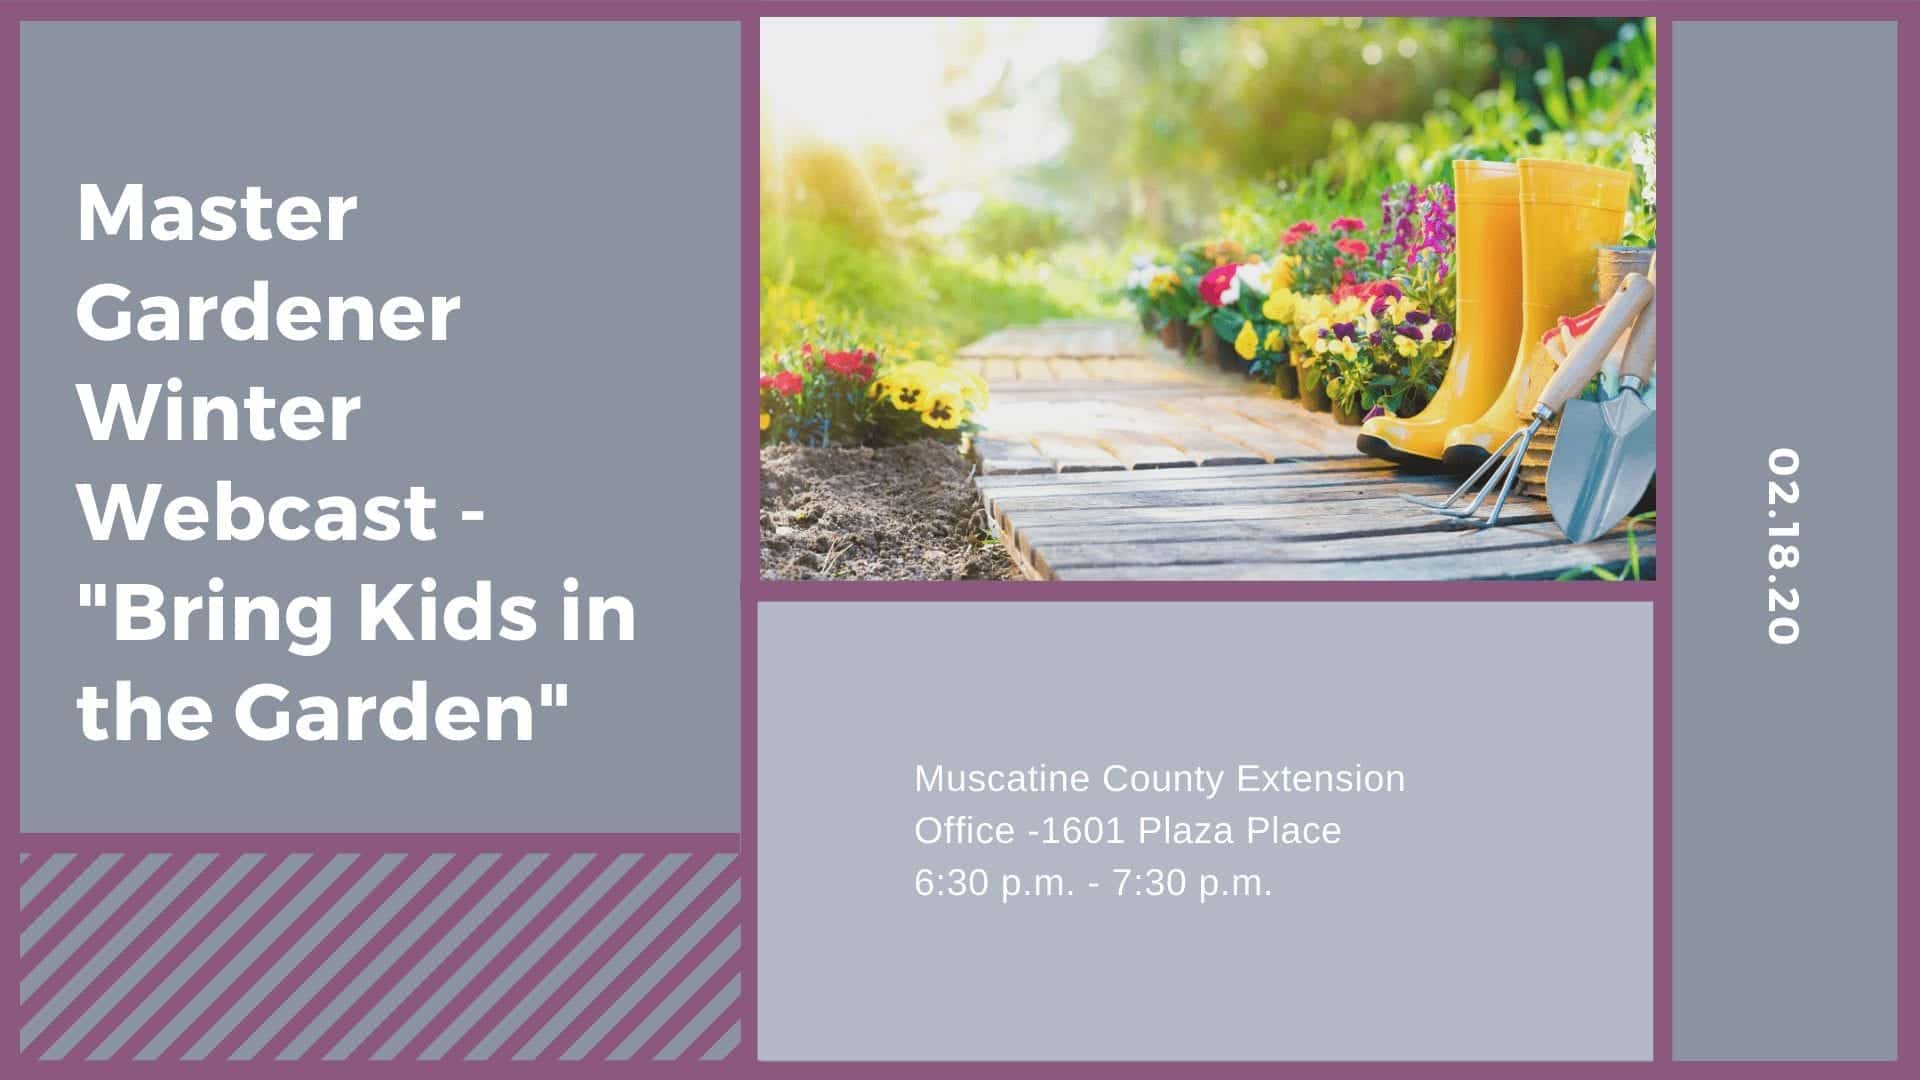 Master Gardener Winter Webcast - "Bring Kids in the Garden"